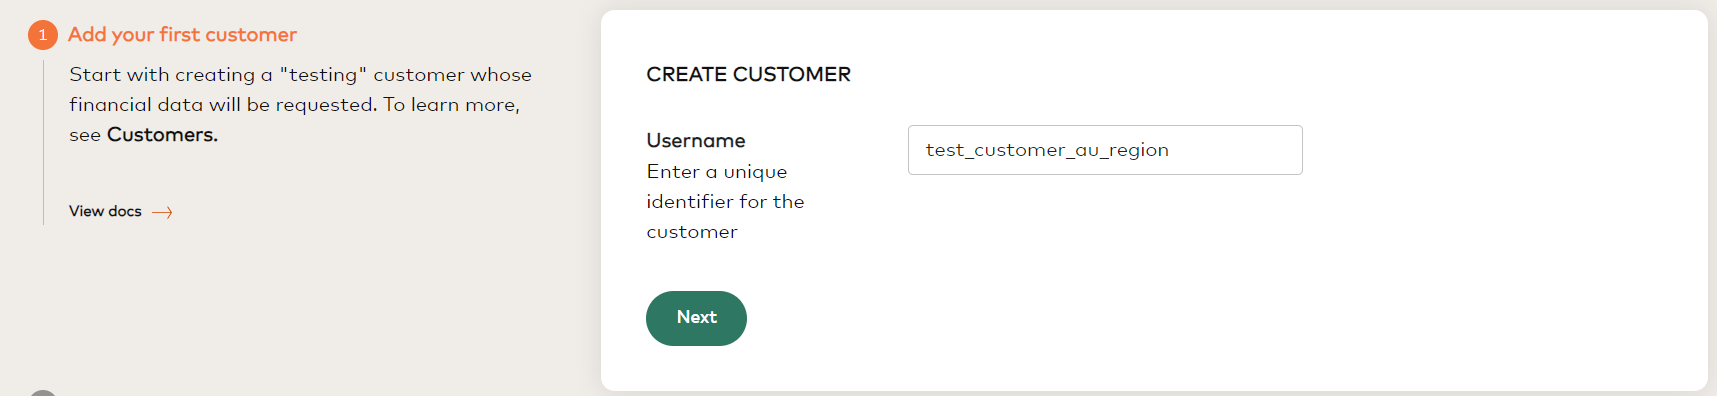 create-customer.png